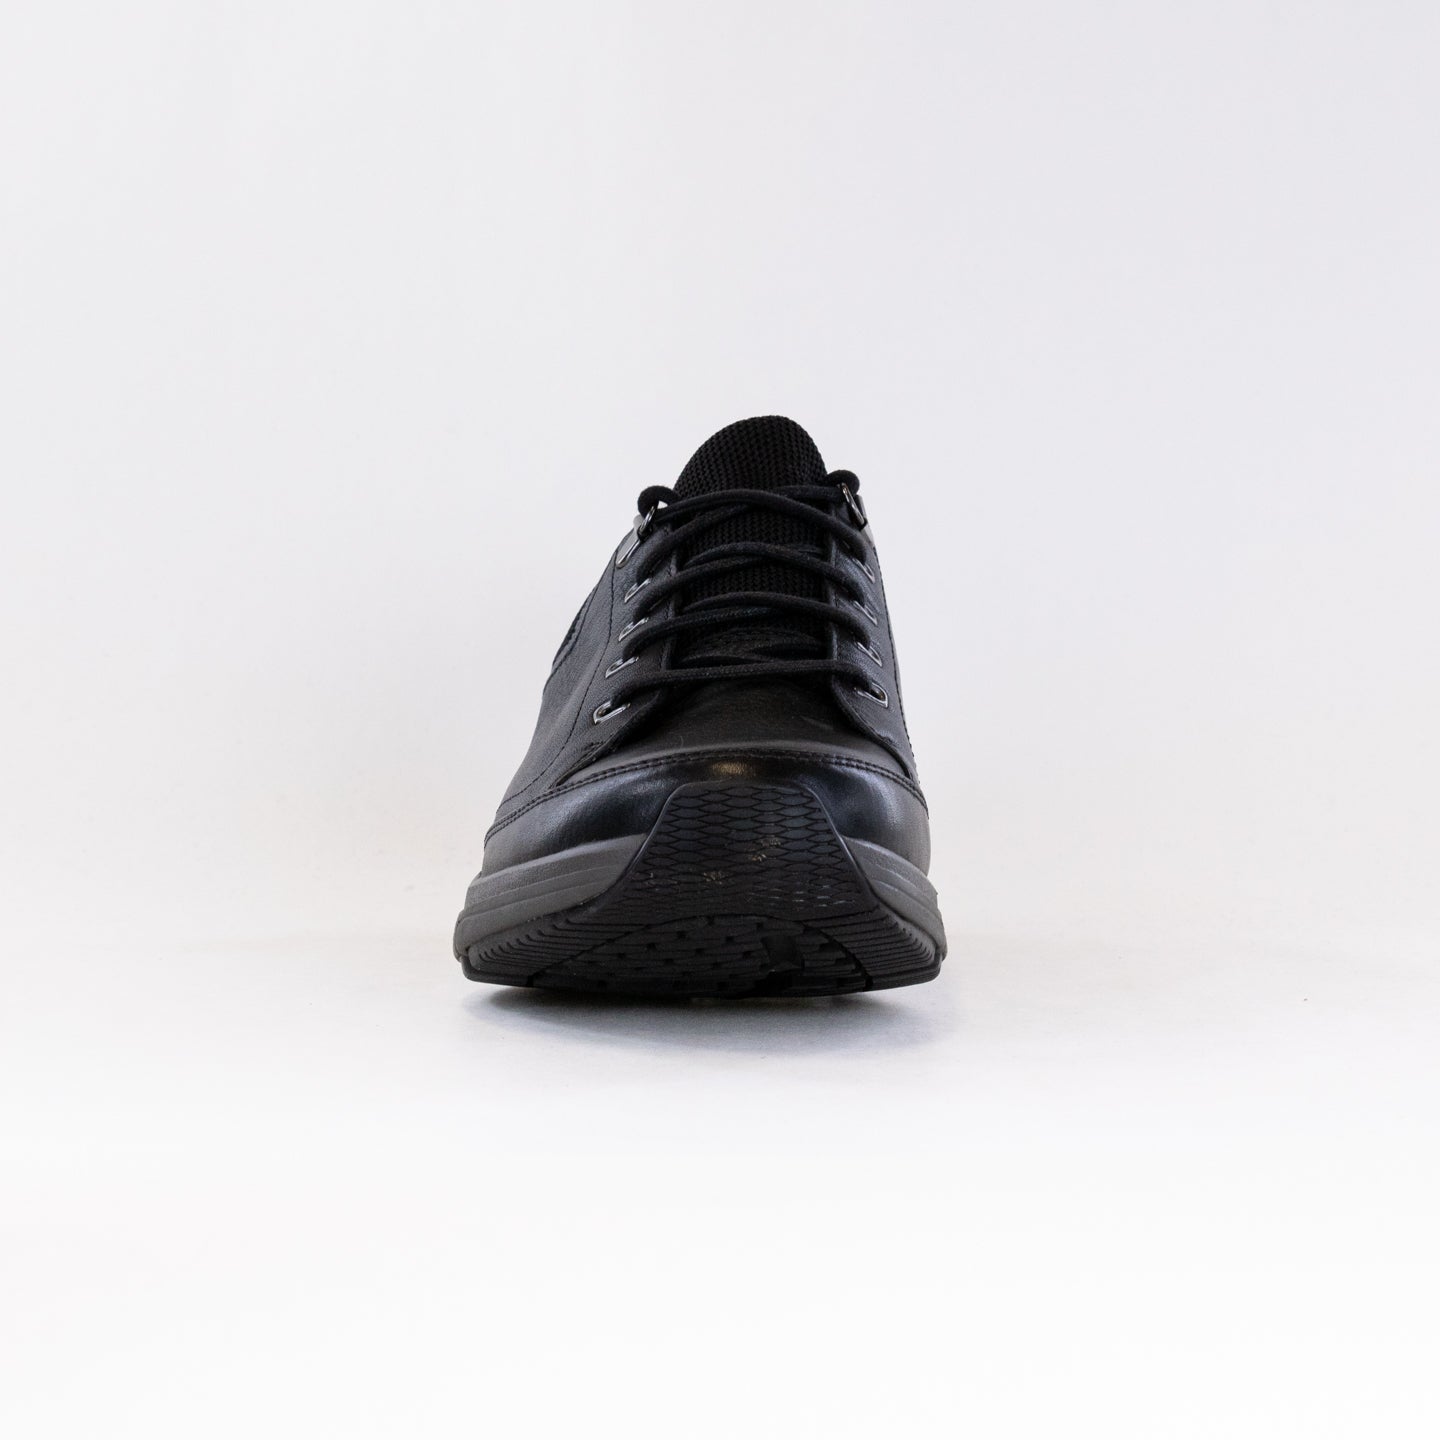 Clarks Wave Vibe 2.0 (Men's) - Black Leather